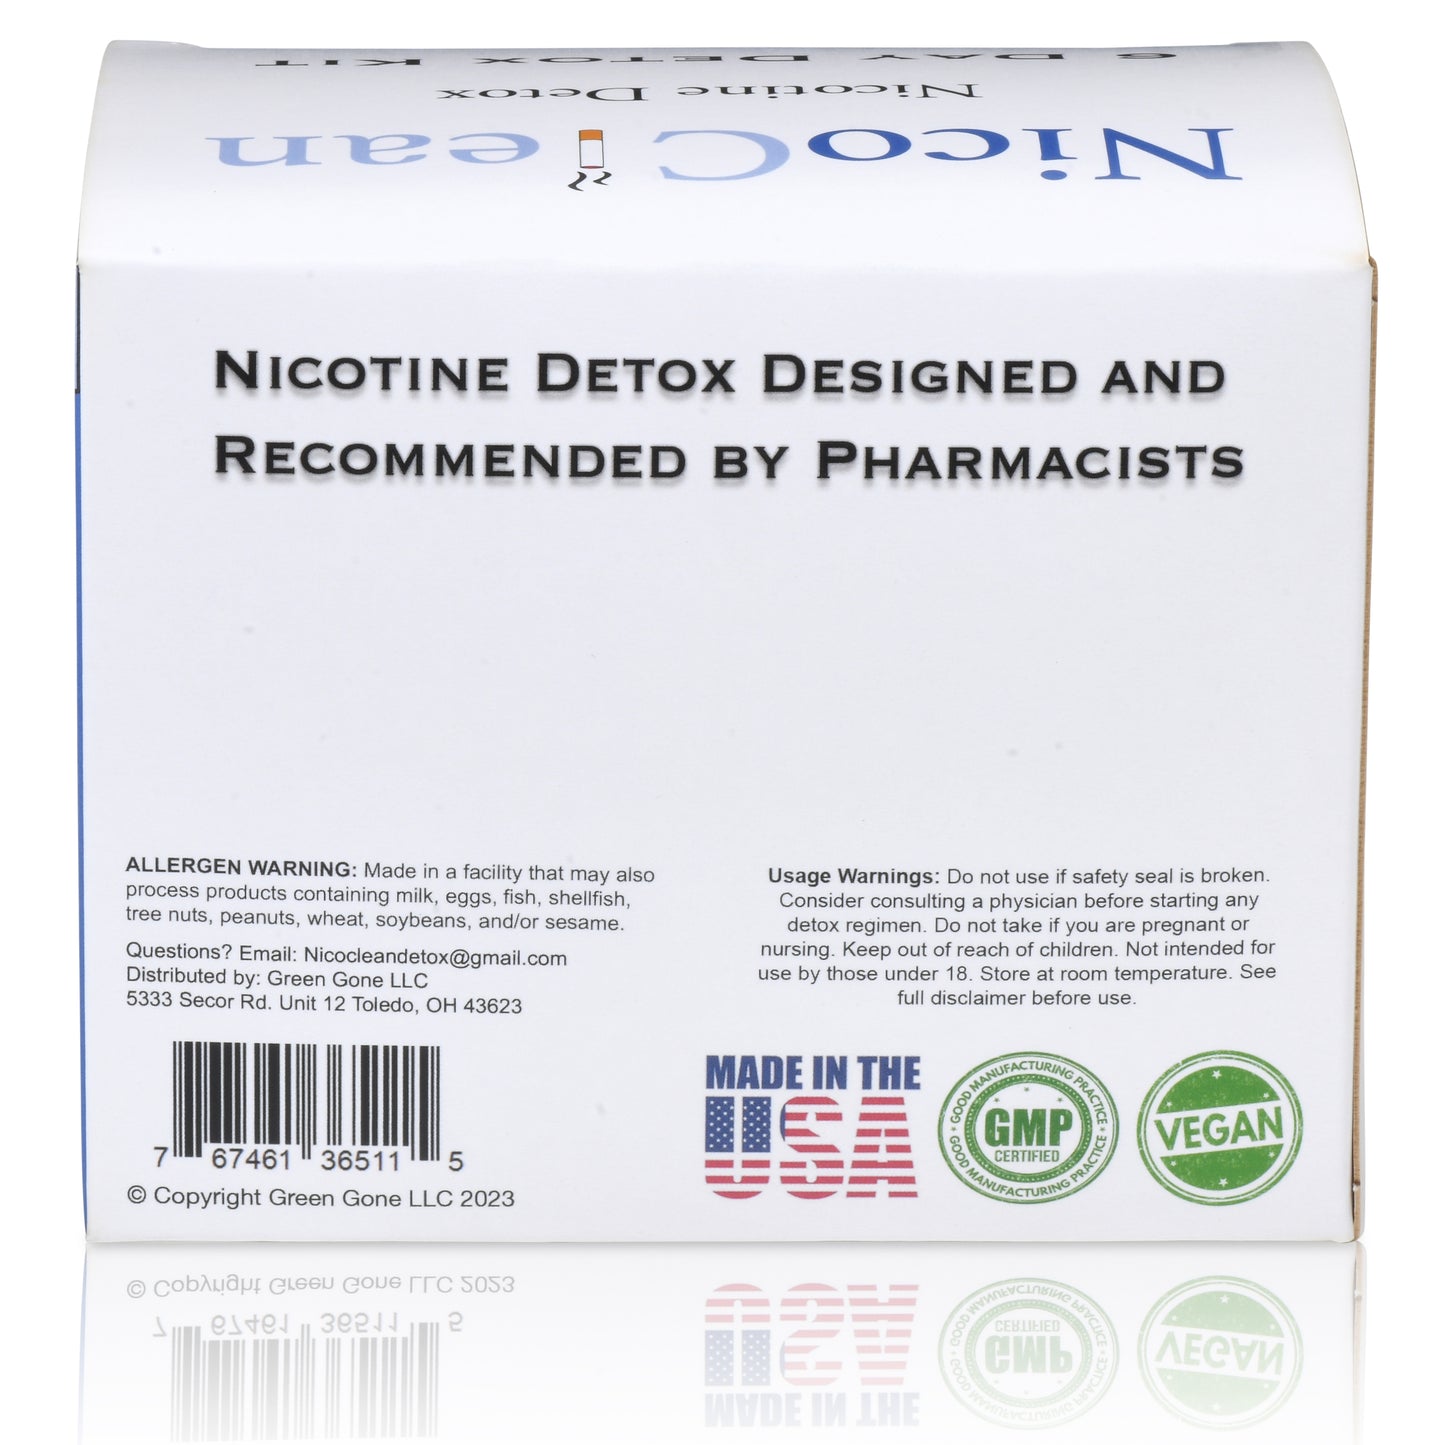 NicoClean 6 Day Detox